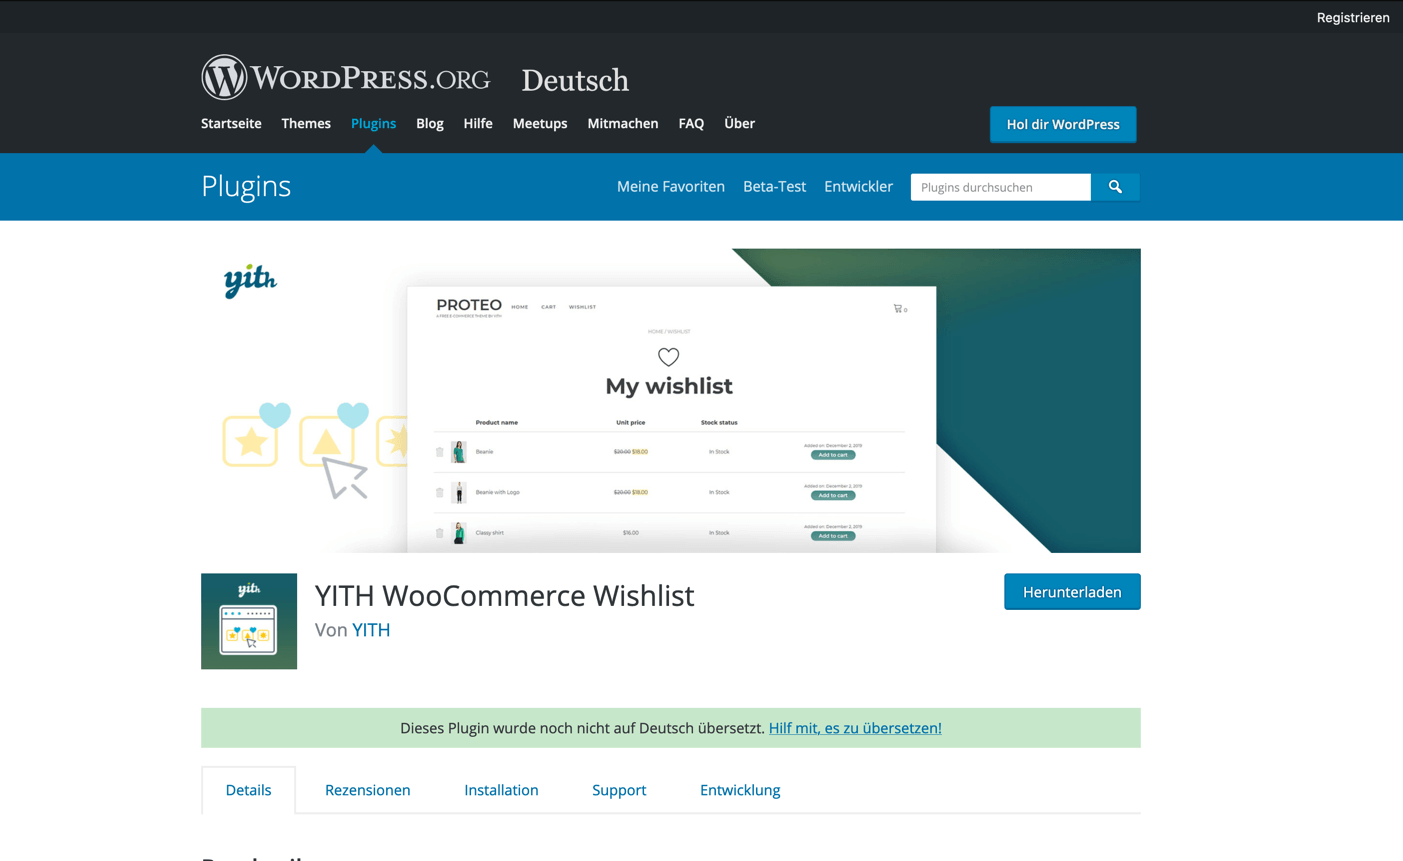 YITH WooCommerce Wishlist auf WordPress.org